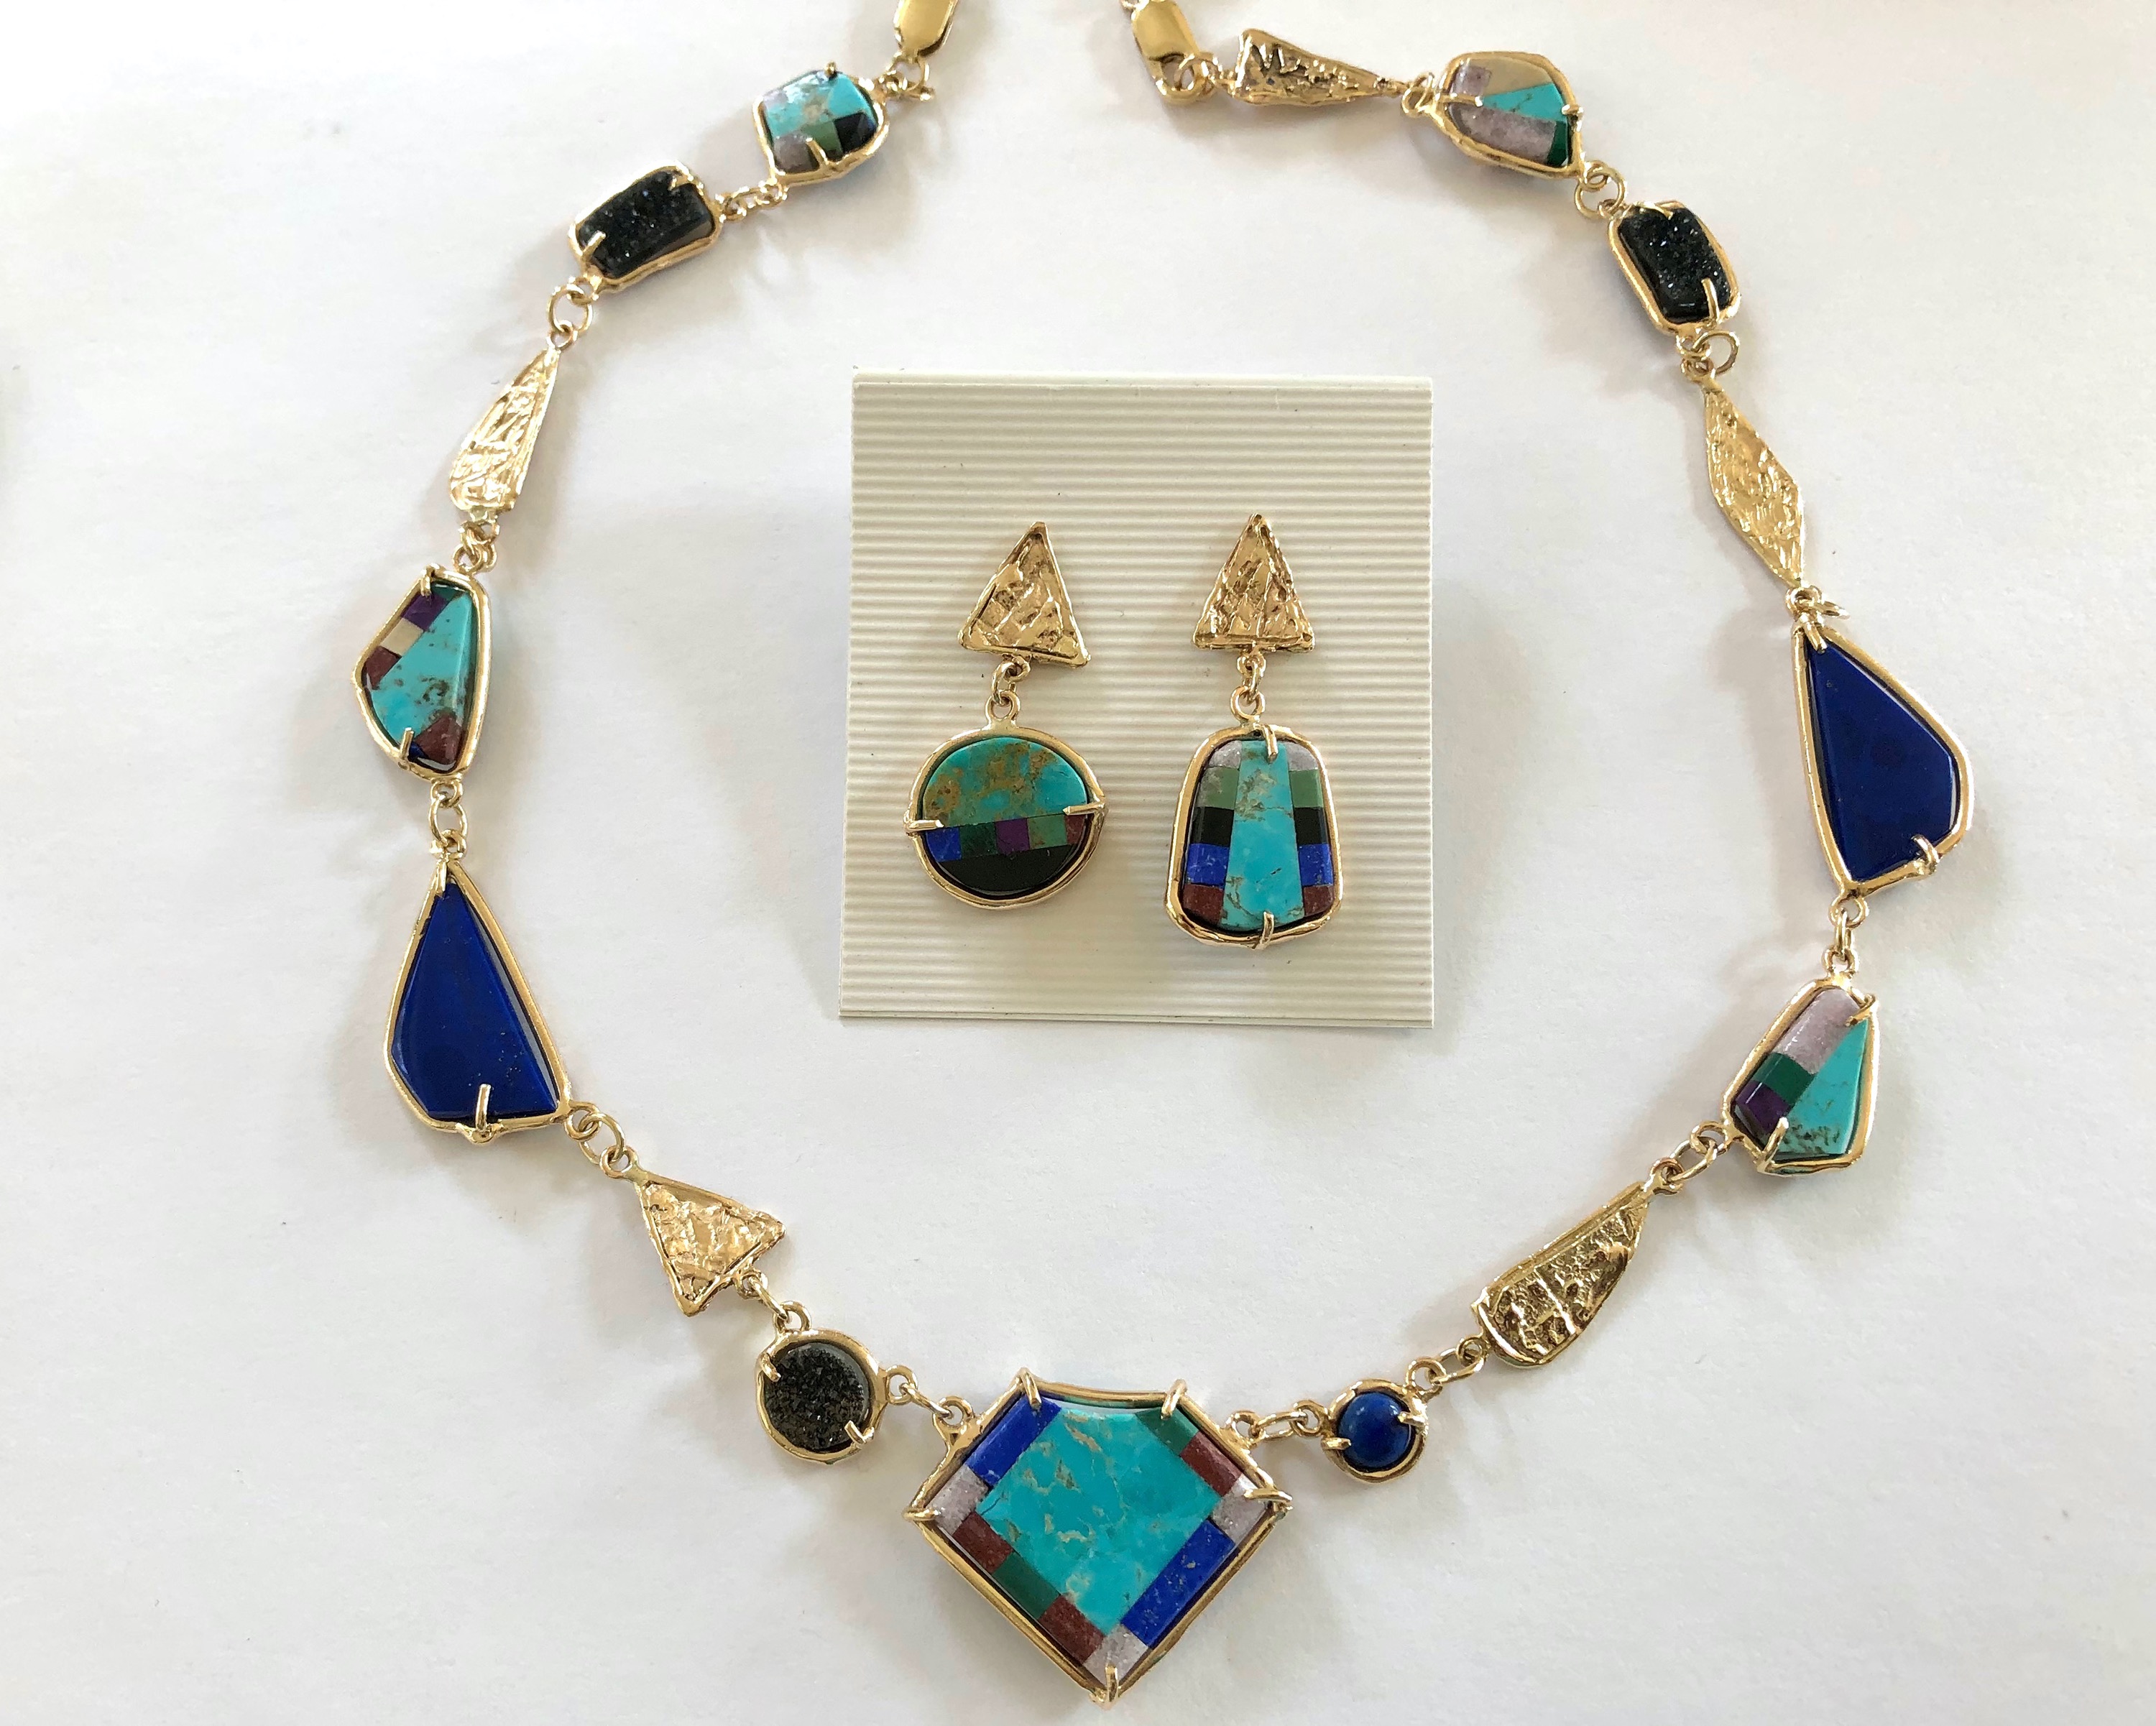 14k gold necklace/earrings multicolored gemstones 234